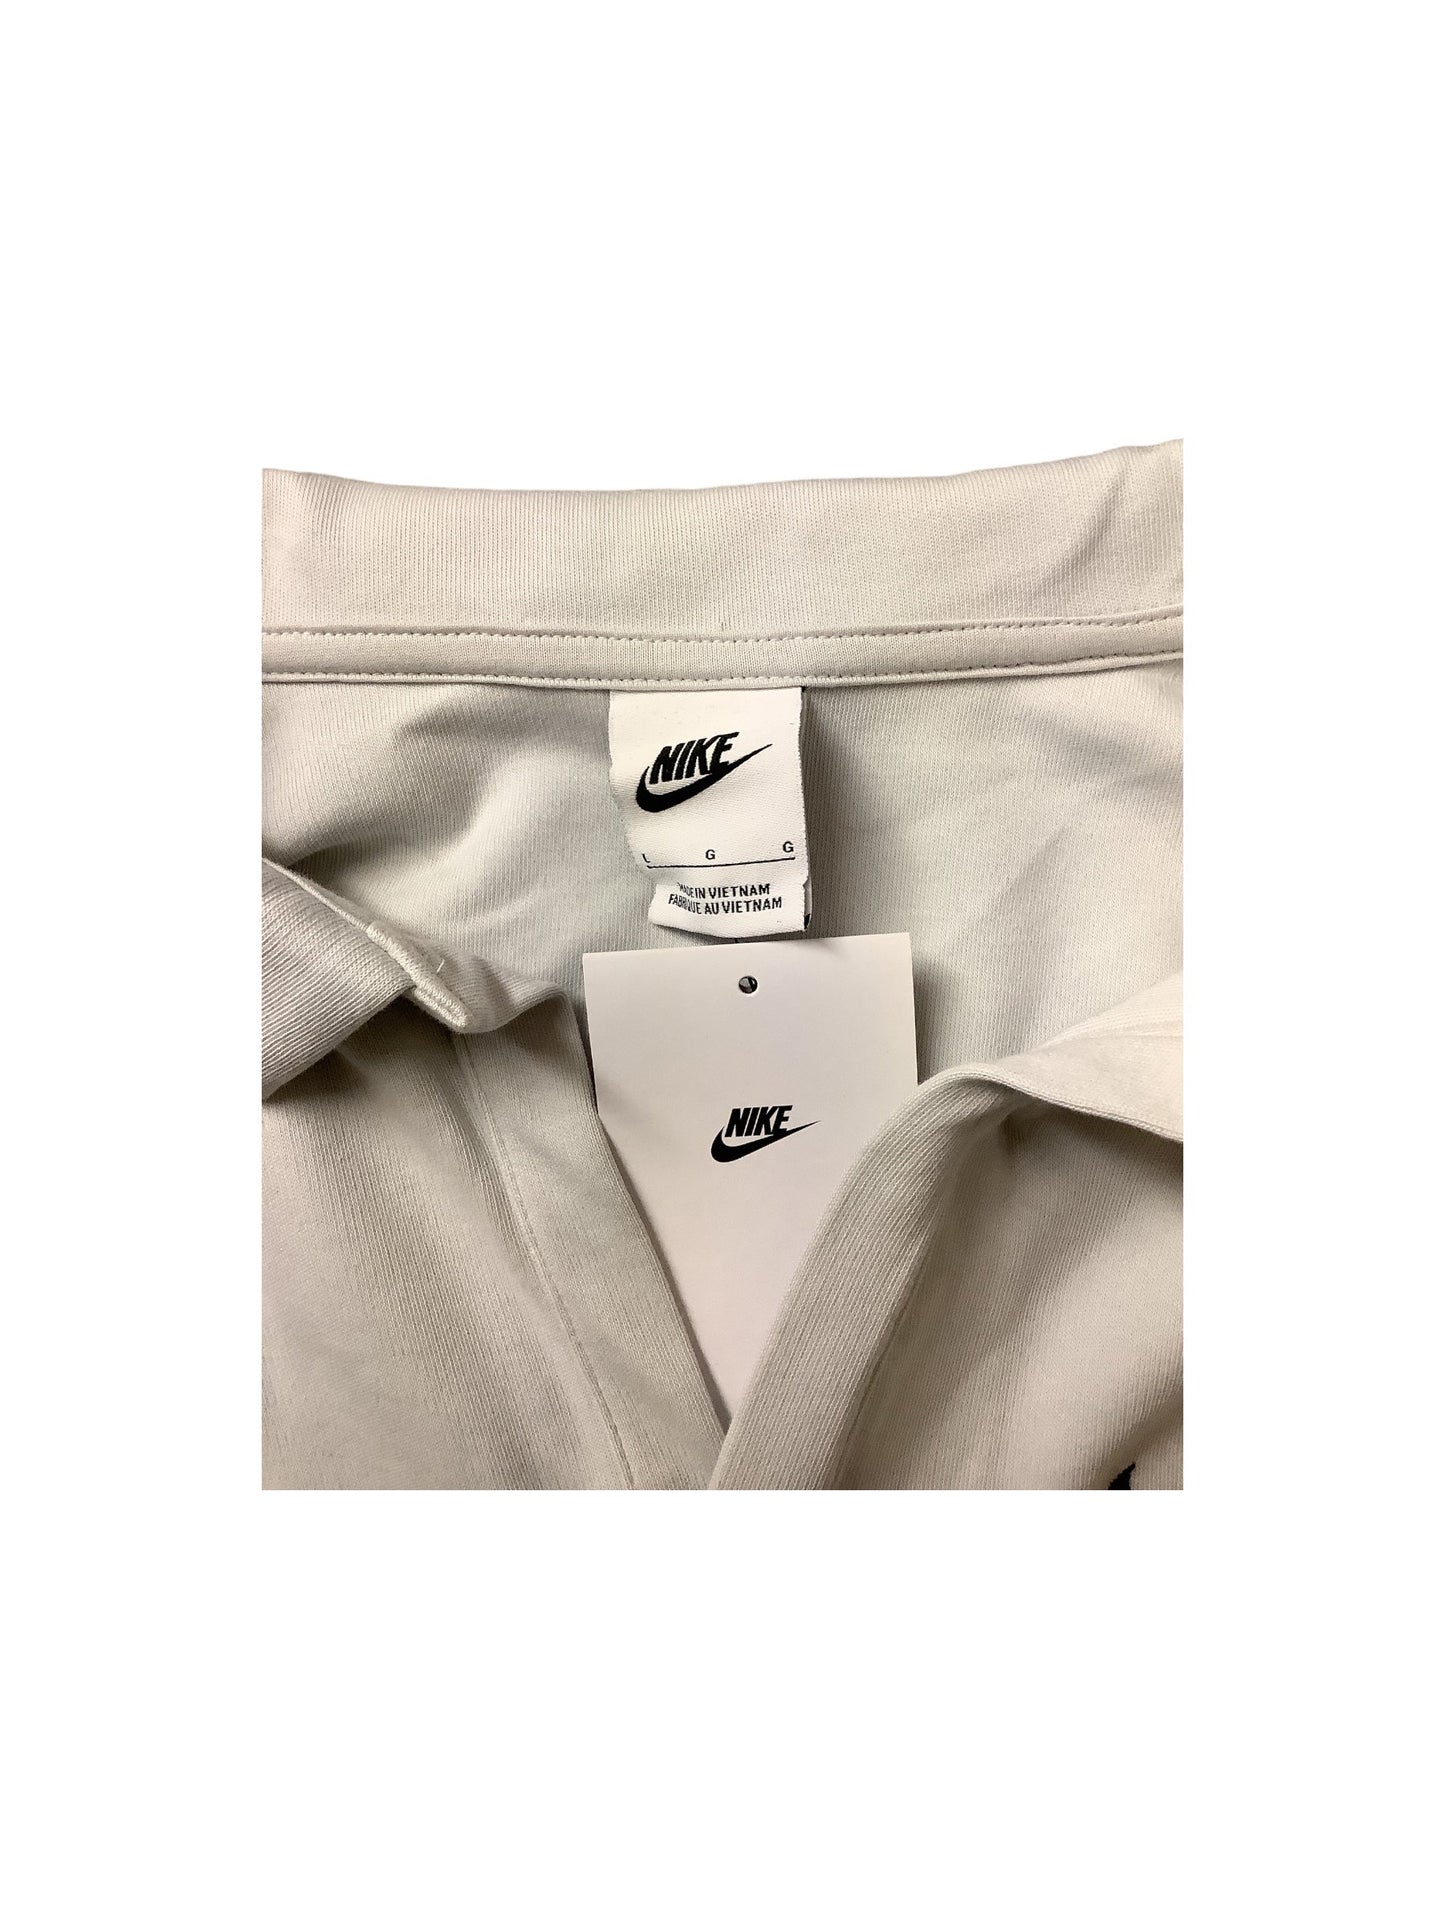 Grey Top Short Sleeve Basic Nike Apparel, Size L